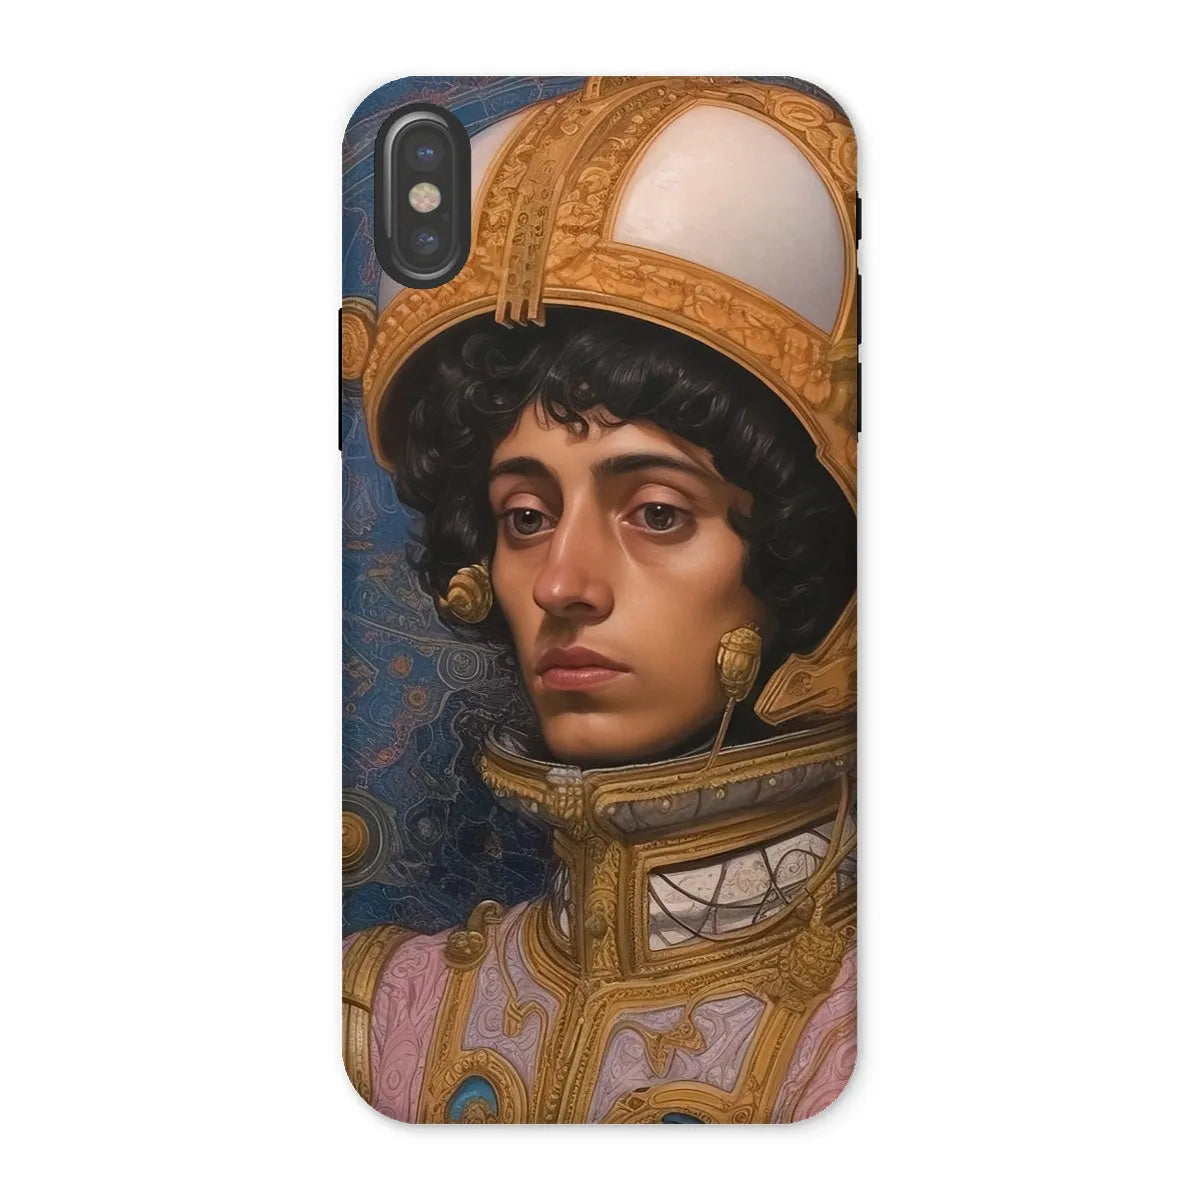 Samir The Gay Astronaut - Lgbtq Art Phone Case - Iphone x / Matte - Mobile Phone Cases - Aesthetic Art